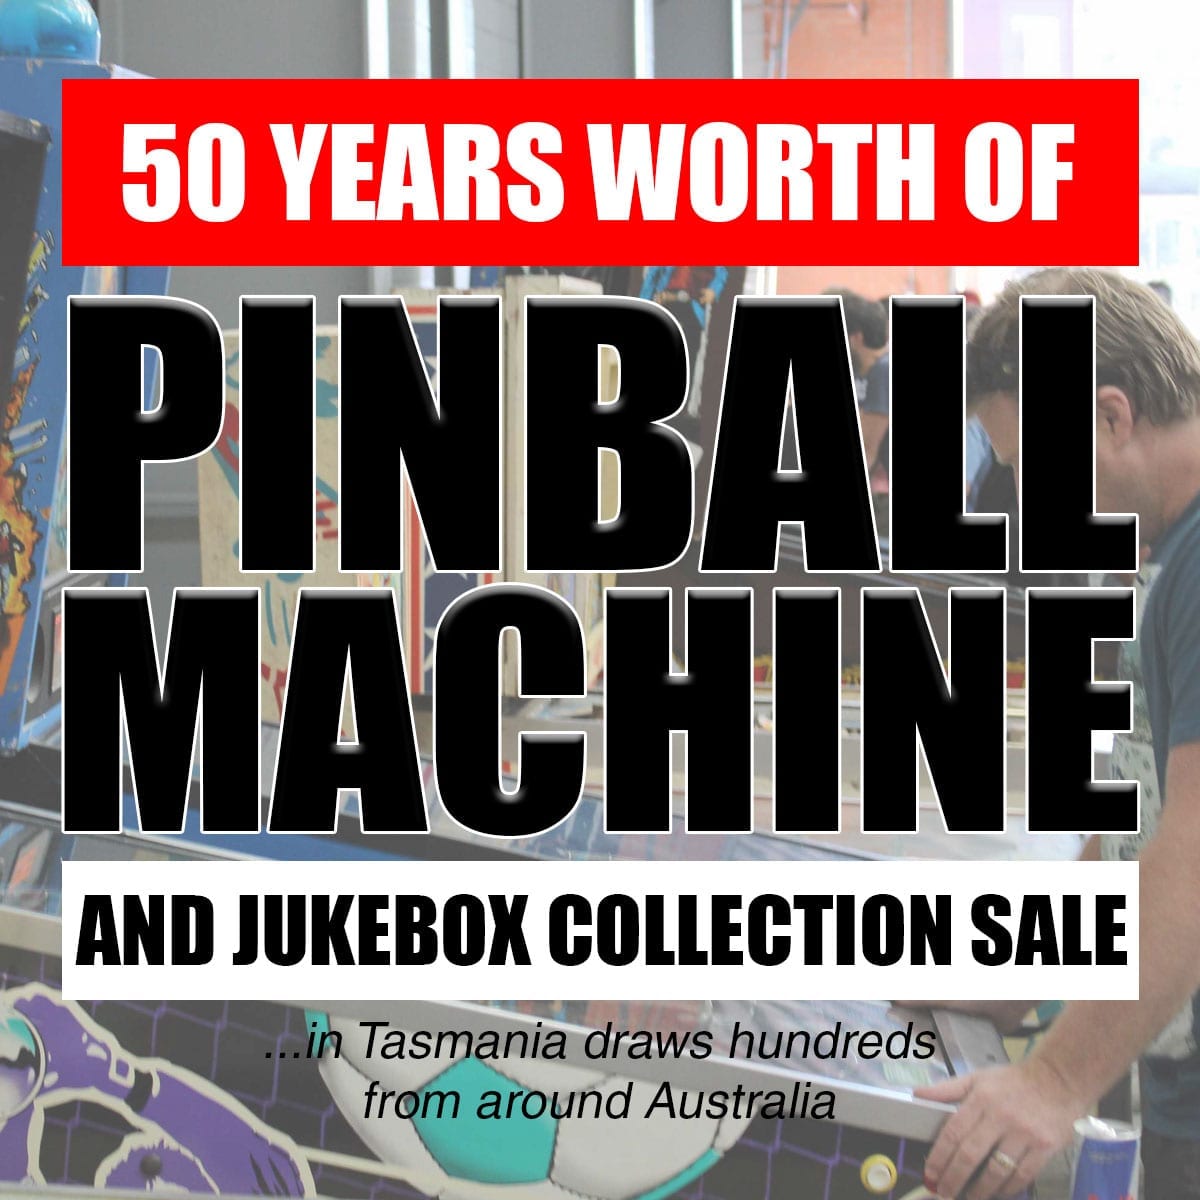 50 years worth of pinball machine and jukebox collection sale in Tasmania draws hundreds from around Australia